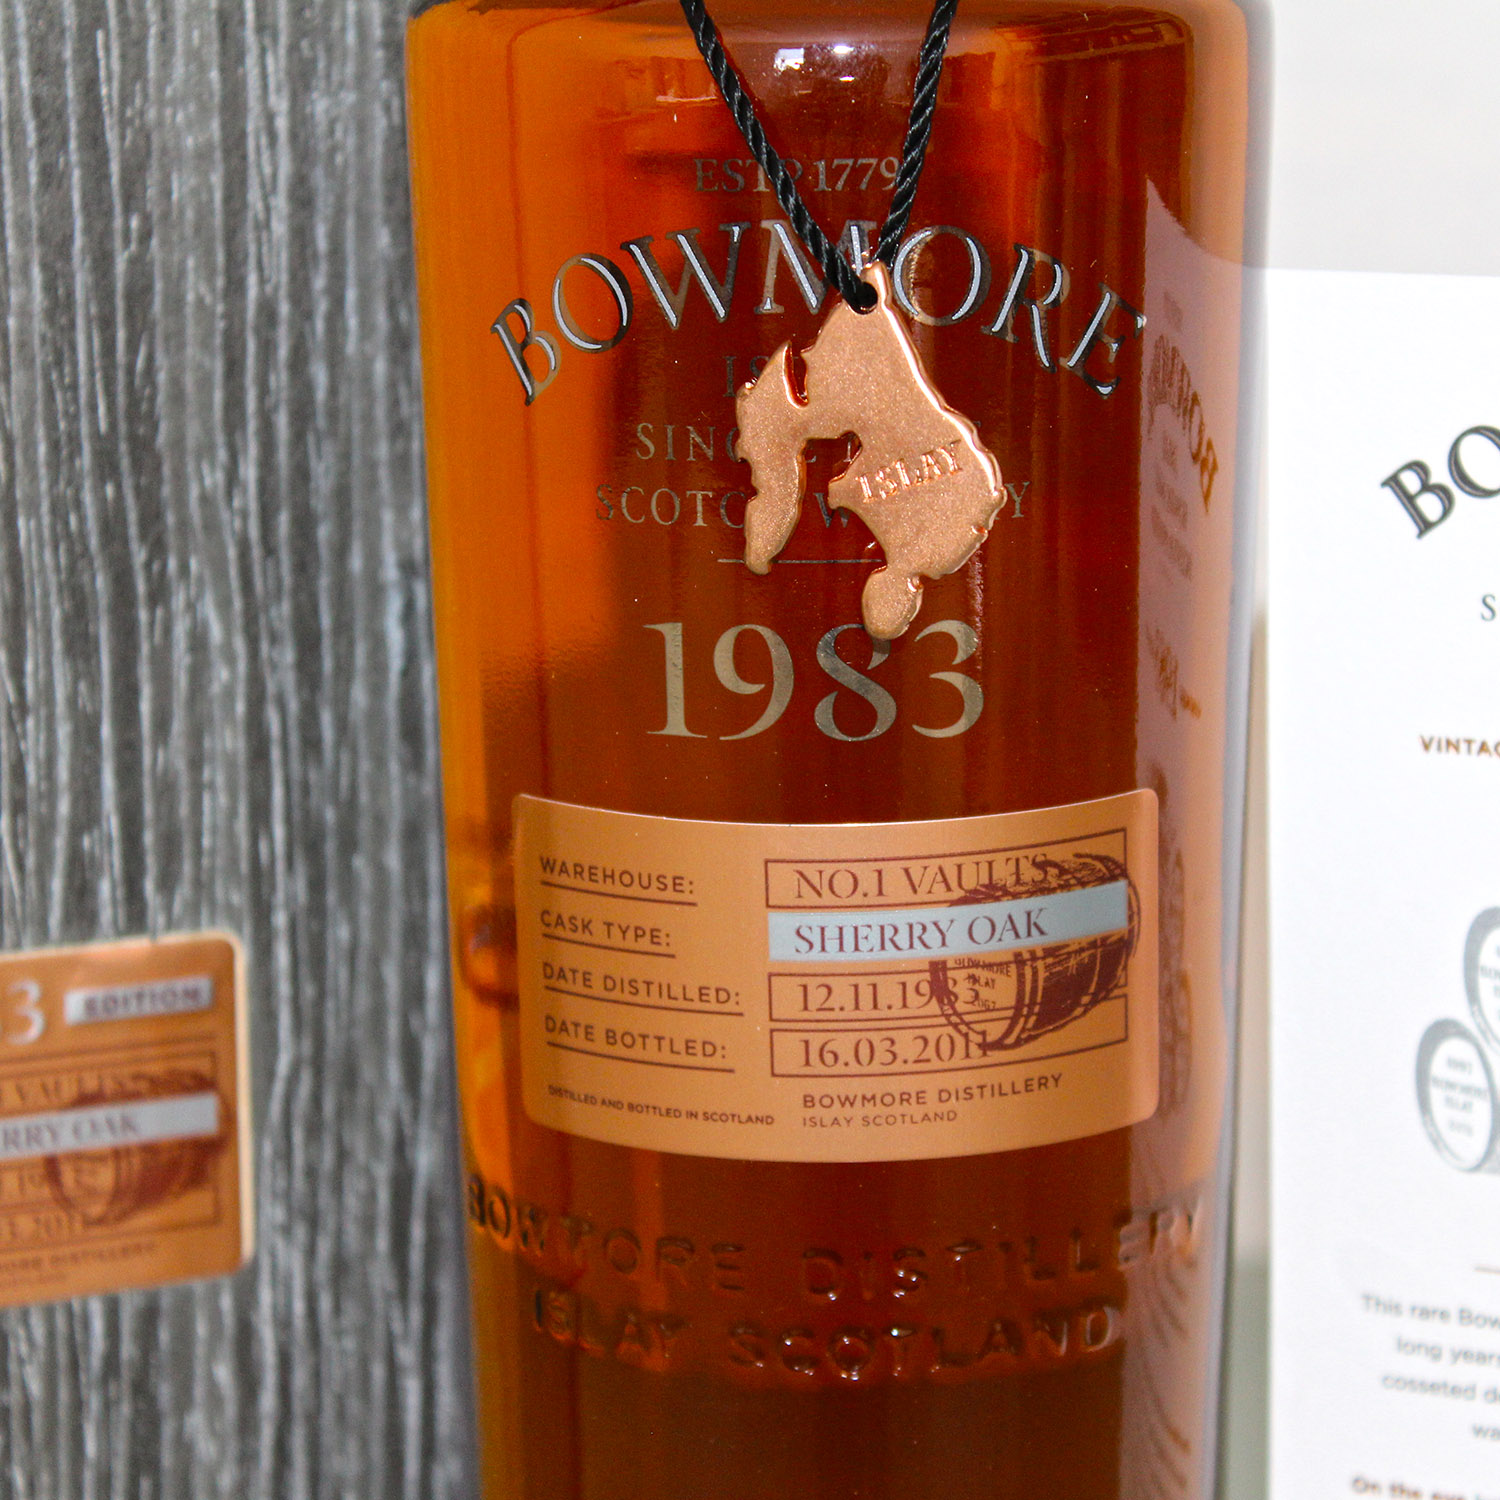 Bowmore 1983 27 Year Old Single Malt Scotch Whisky Label